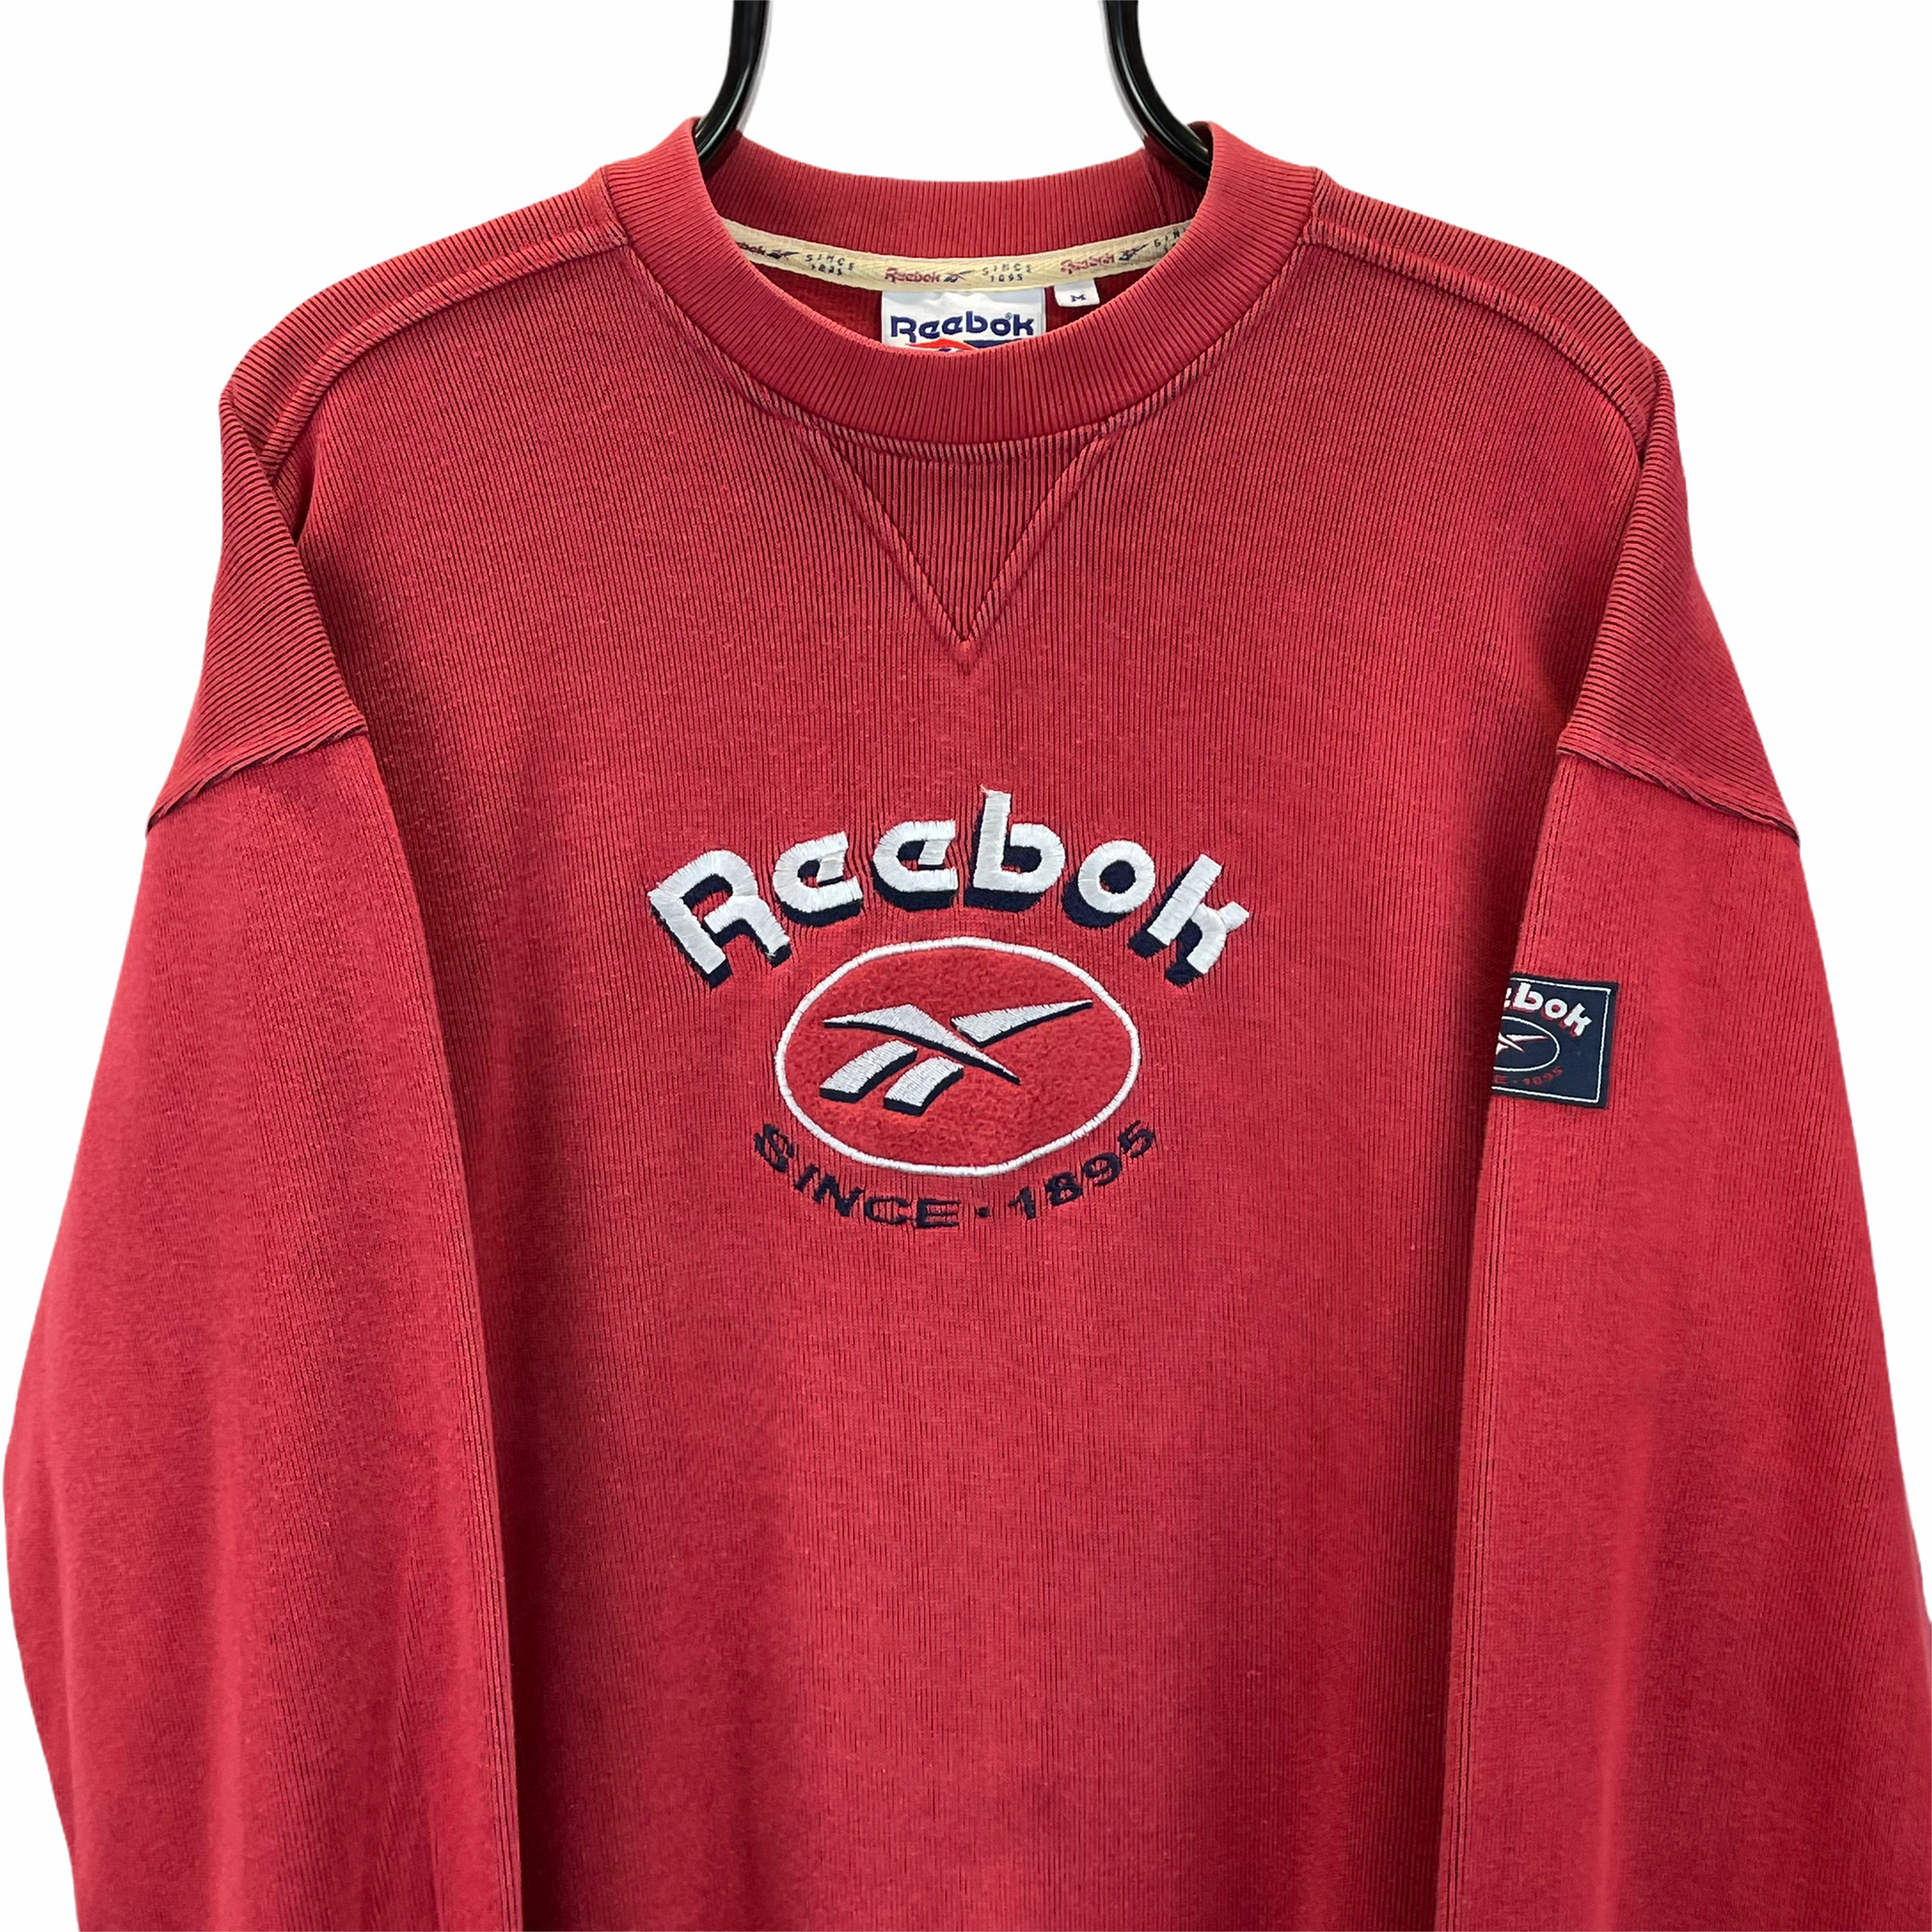 Vintage 80s Reebok Spellout Sweatshirt in Red - Men's Medium/Women's Large